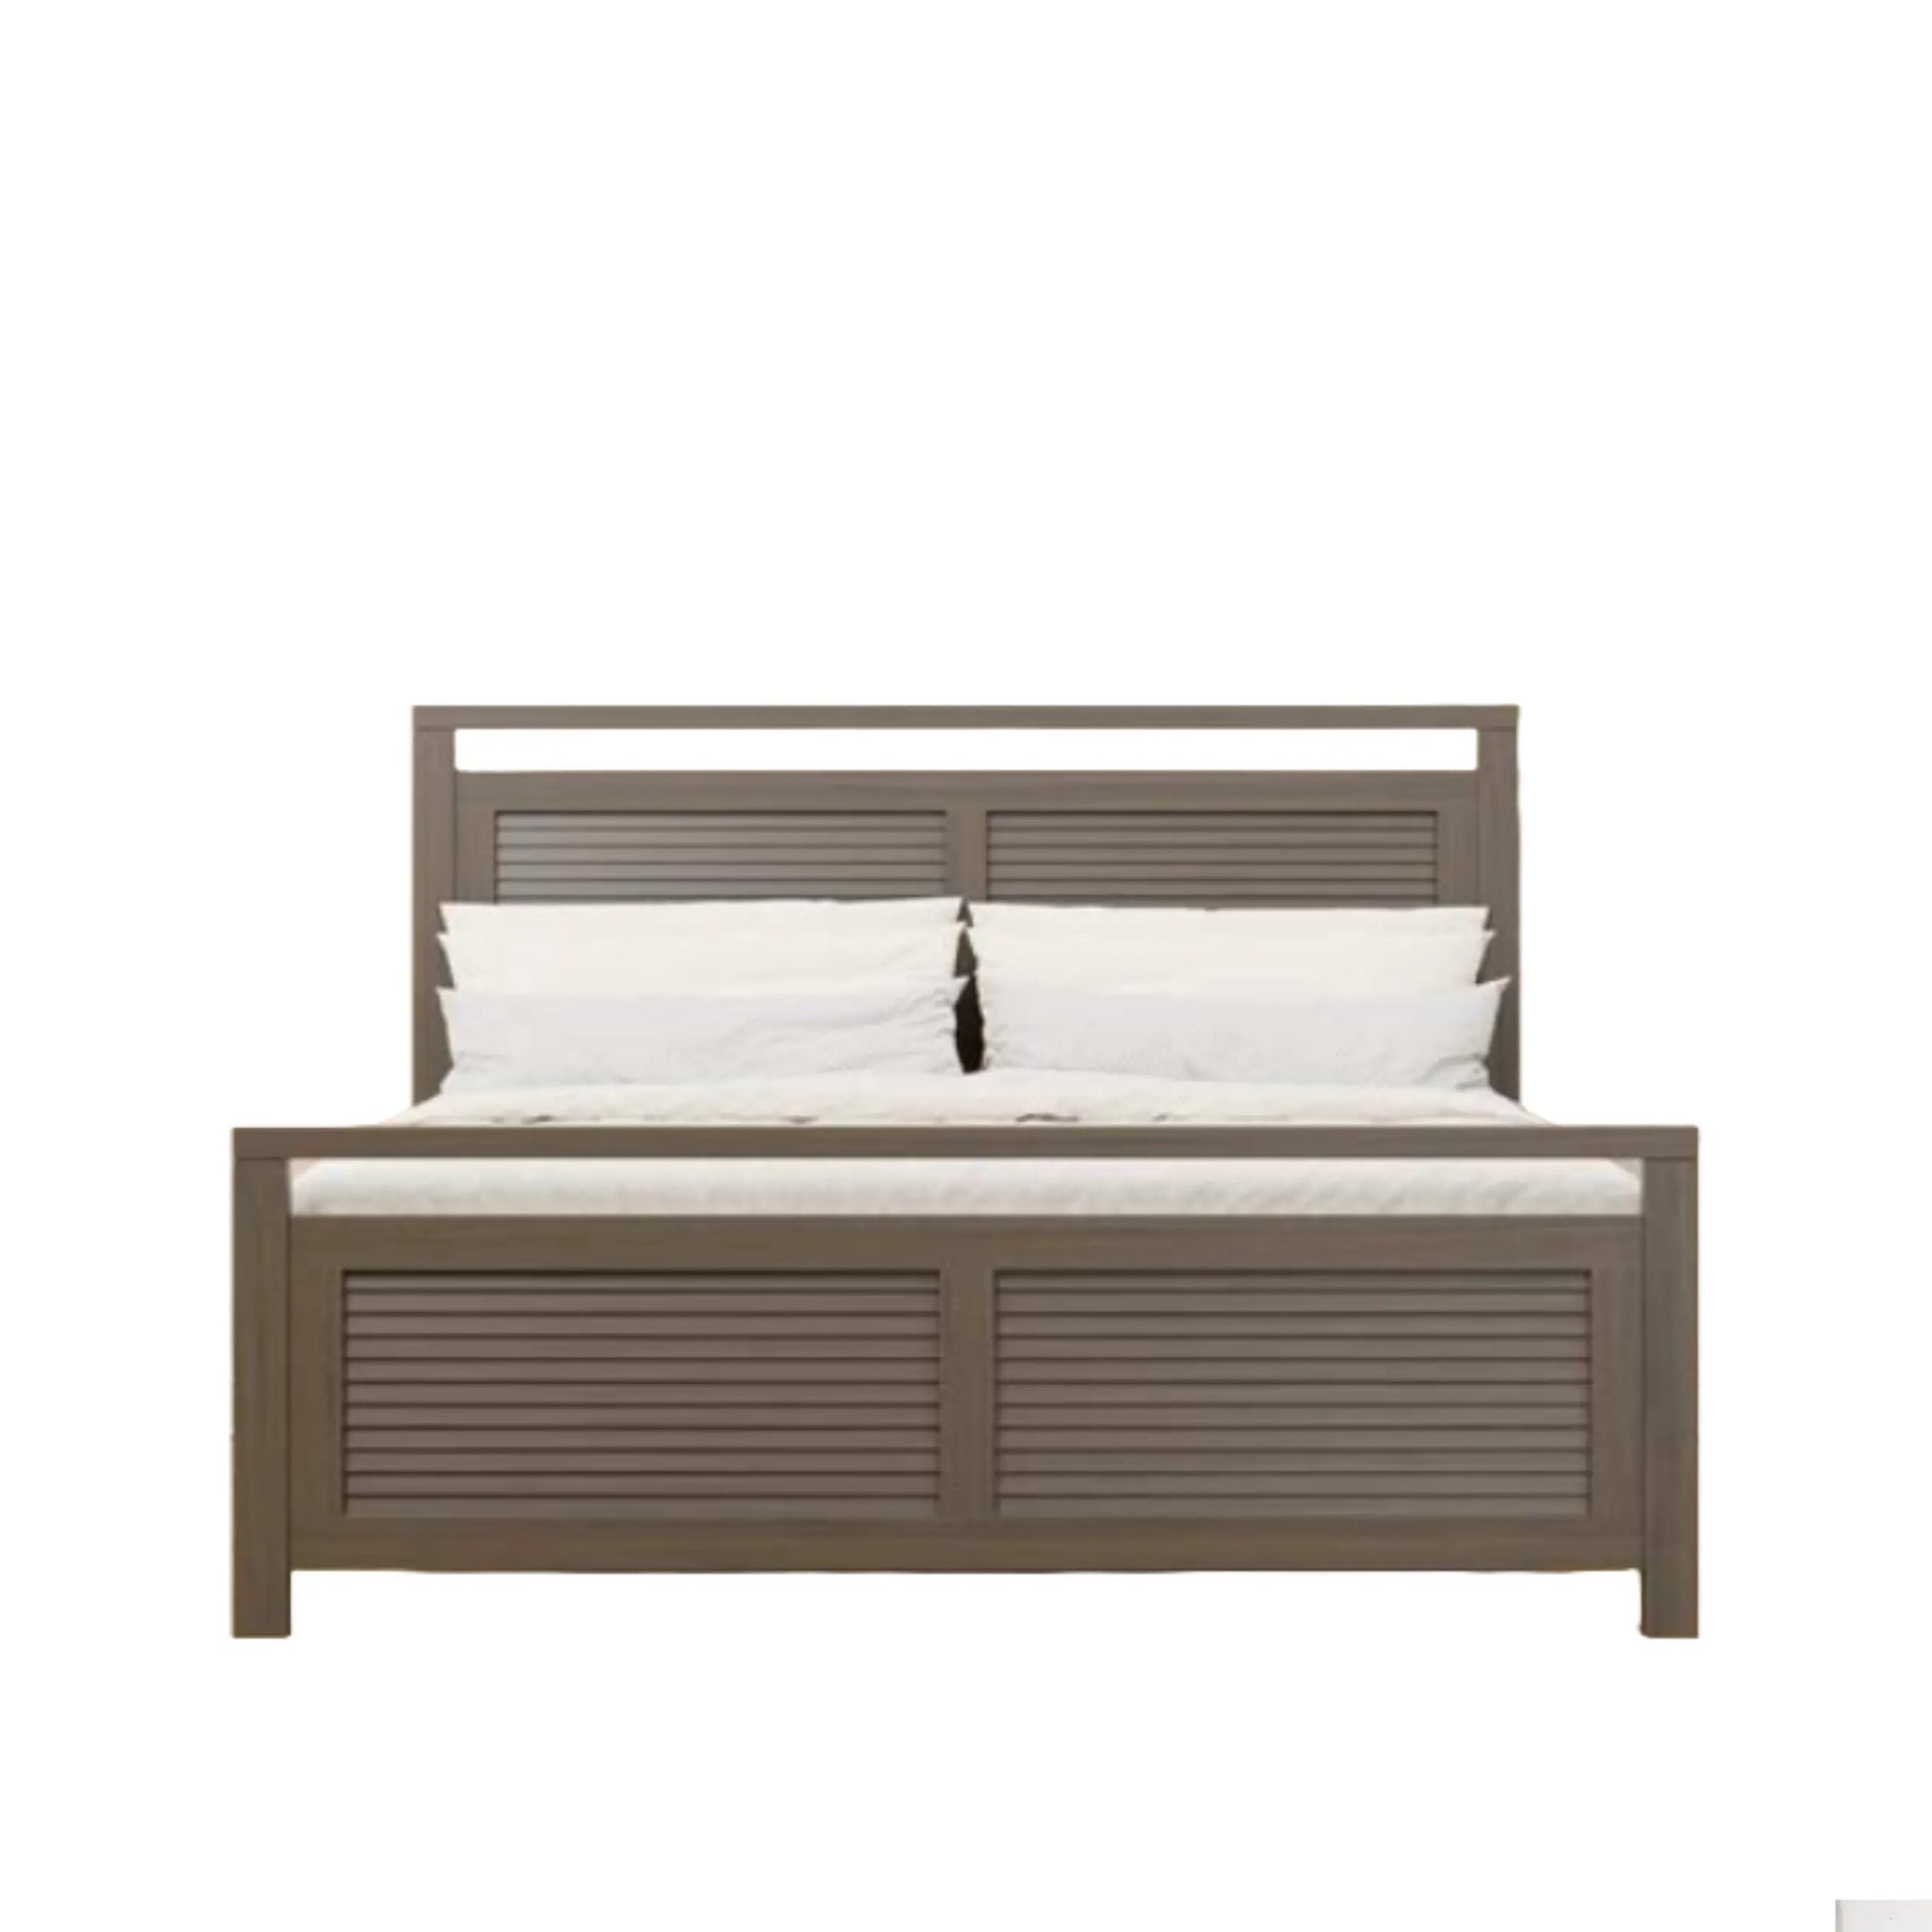 The Lumina, Handmade Contemporary Bed frame Moderncre8ve